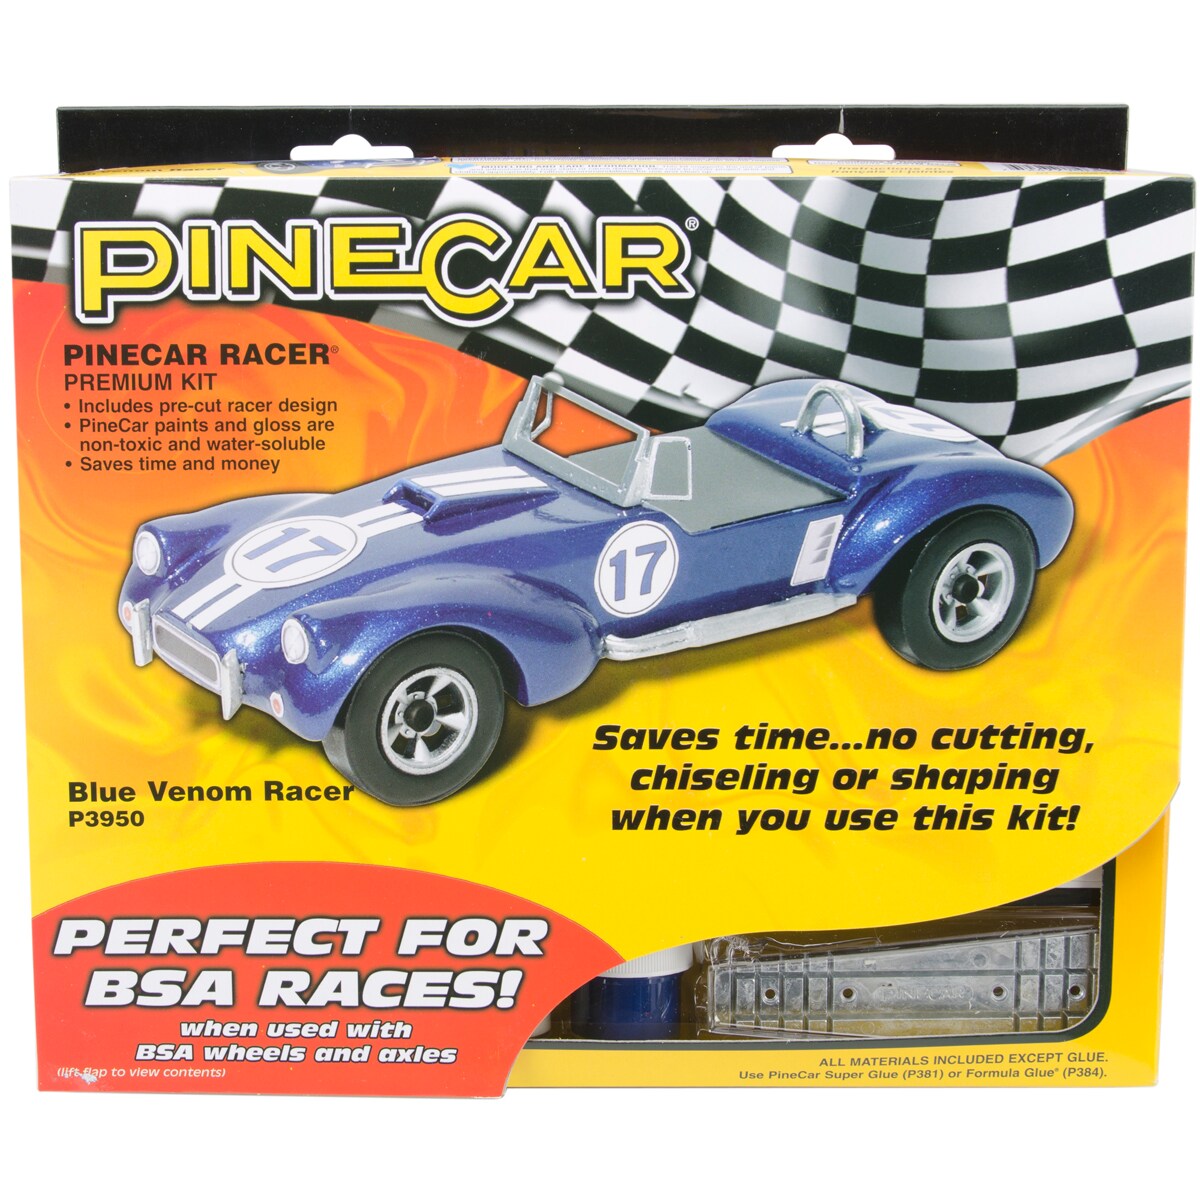 Pine Car Derby Racer Premium Kit-Blue Venom